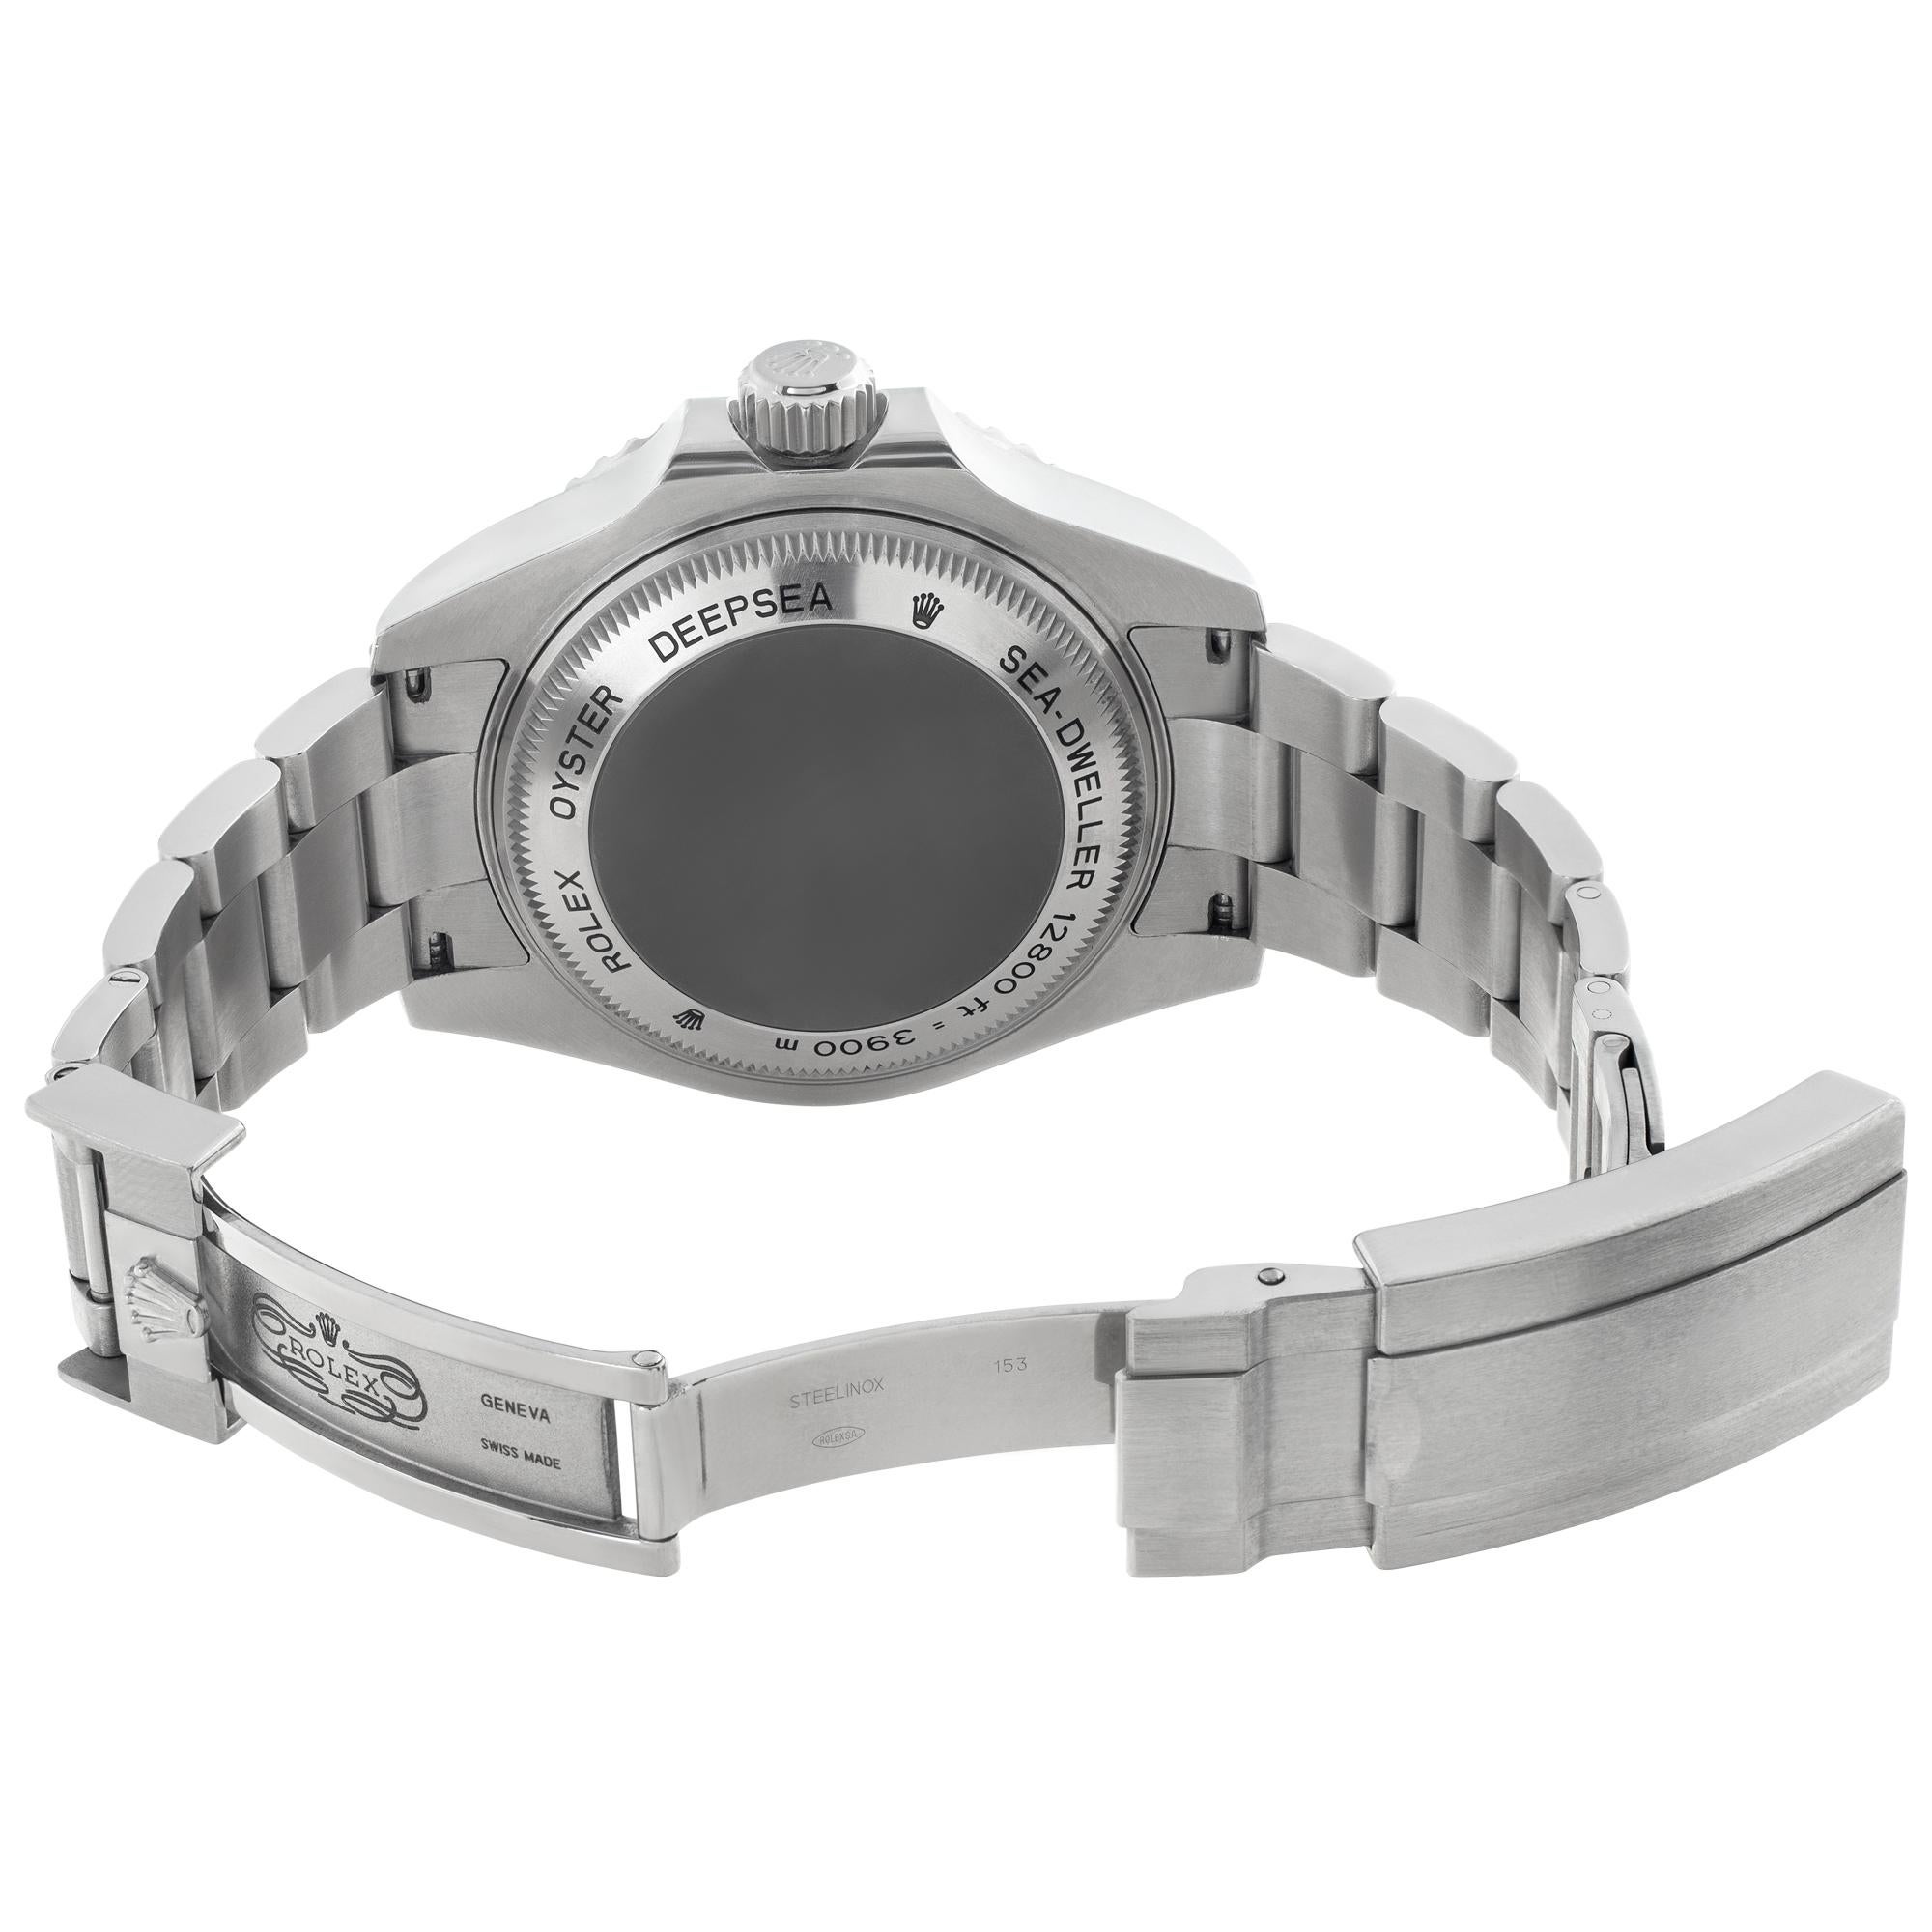 Men's Rolex Sea-Dweller 116660 in stainless steel 44mm automatic watch